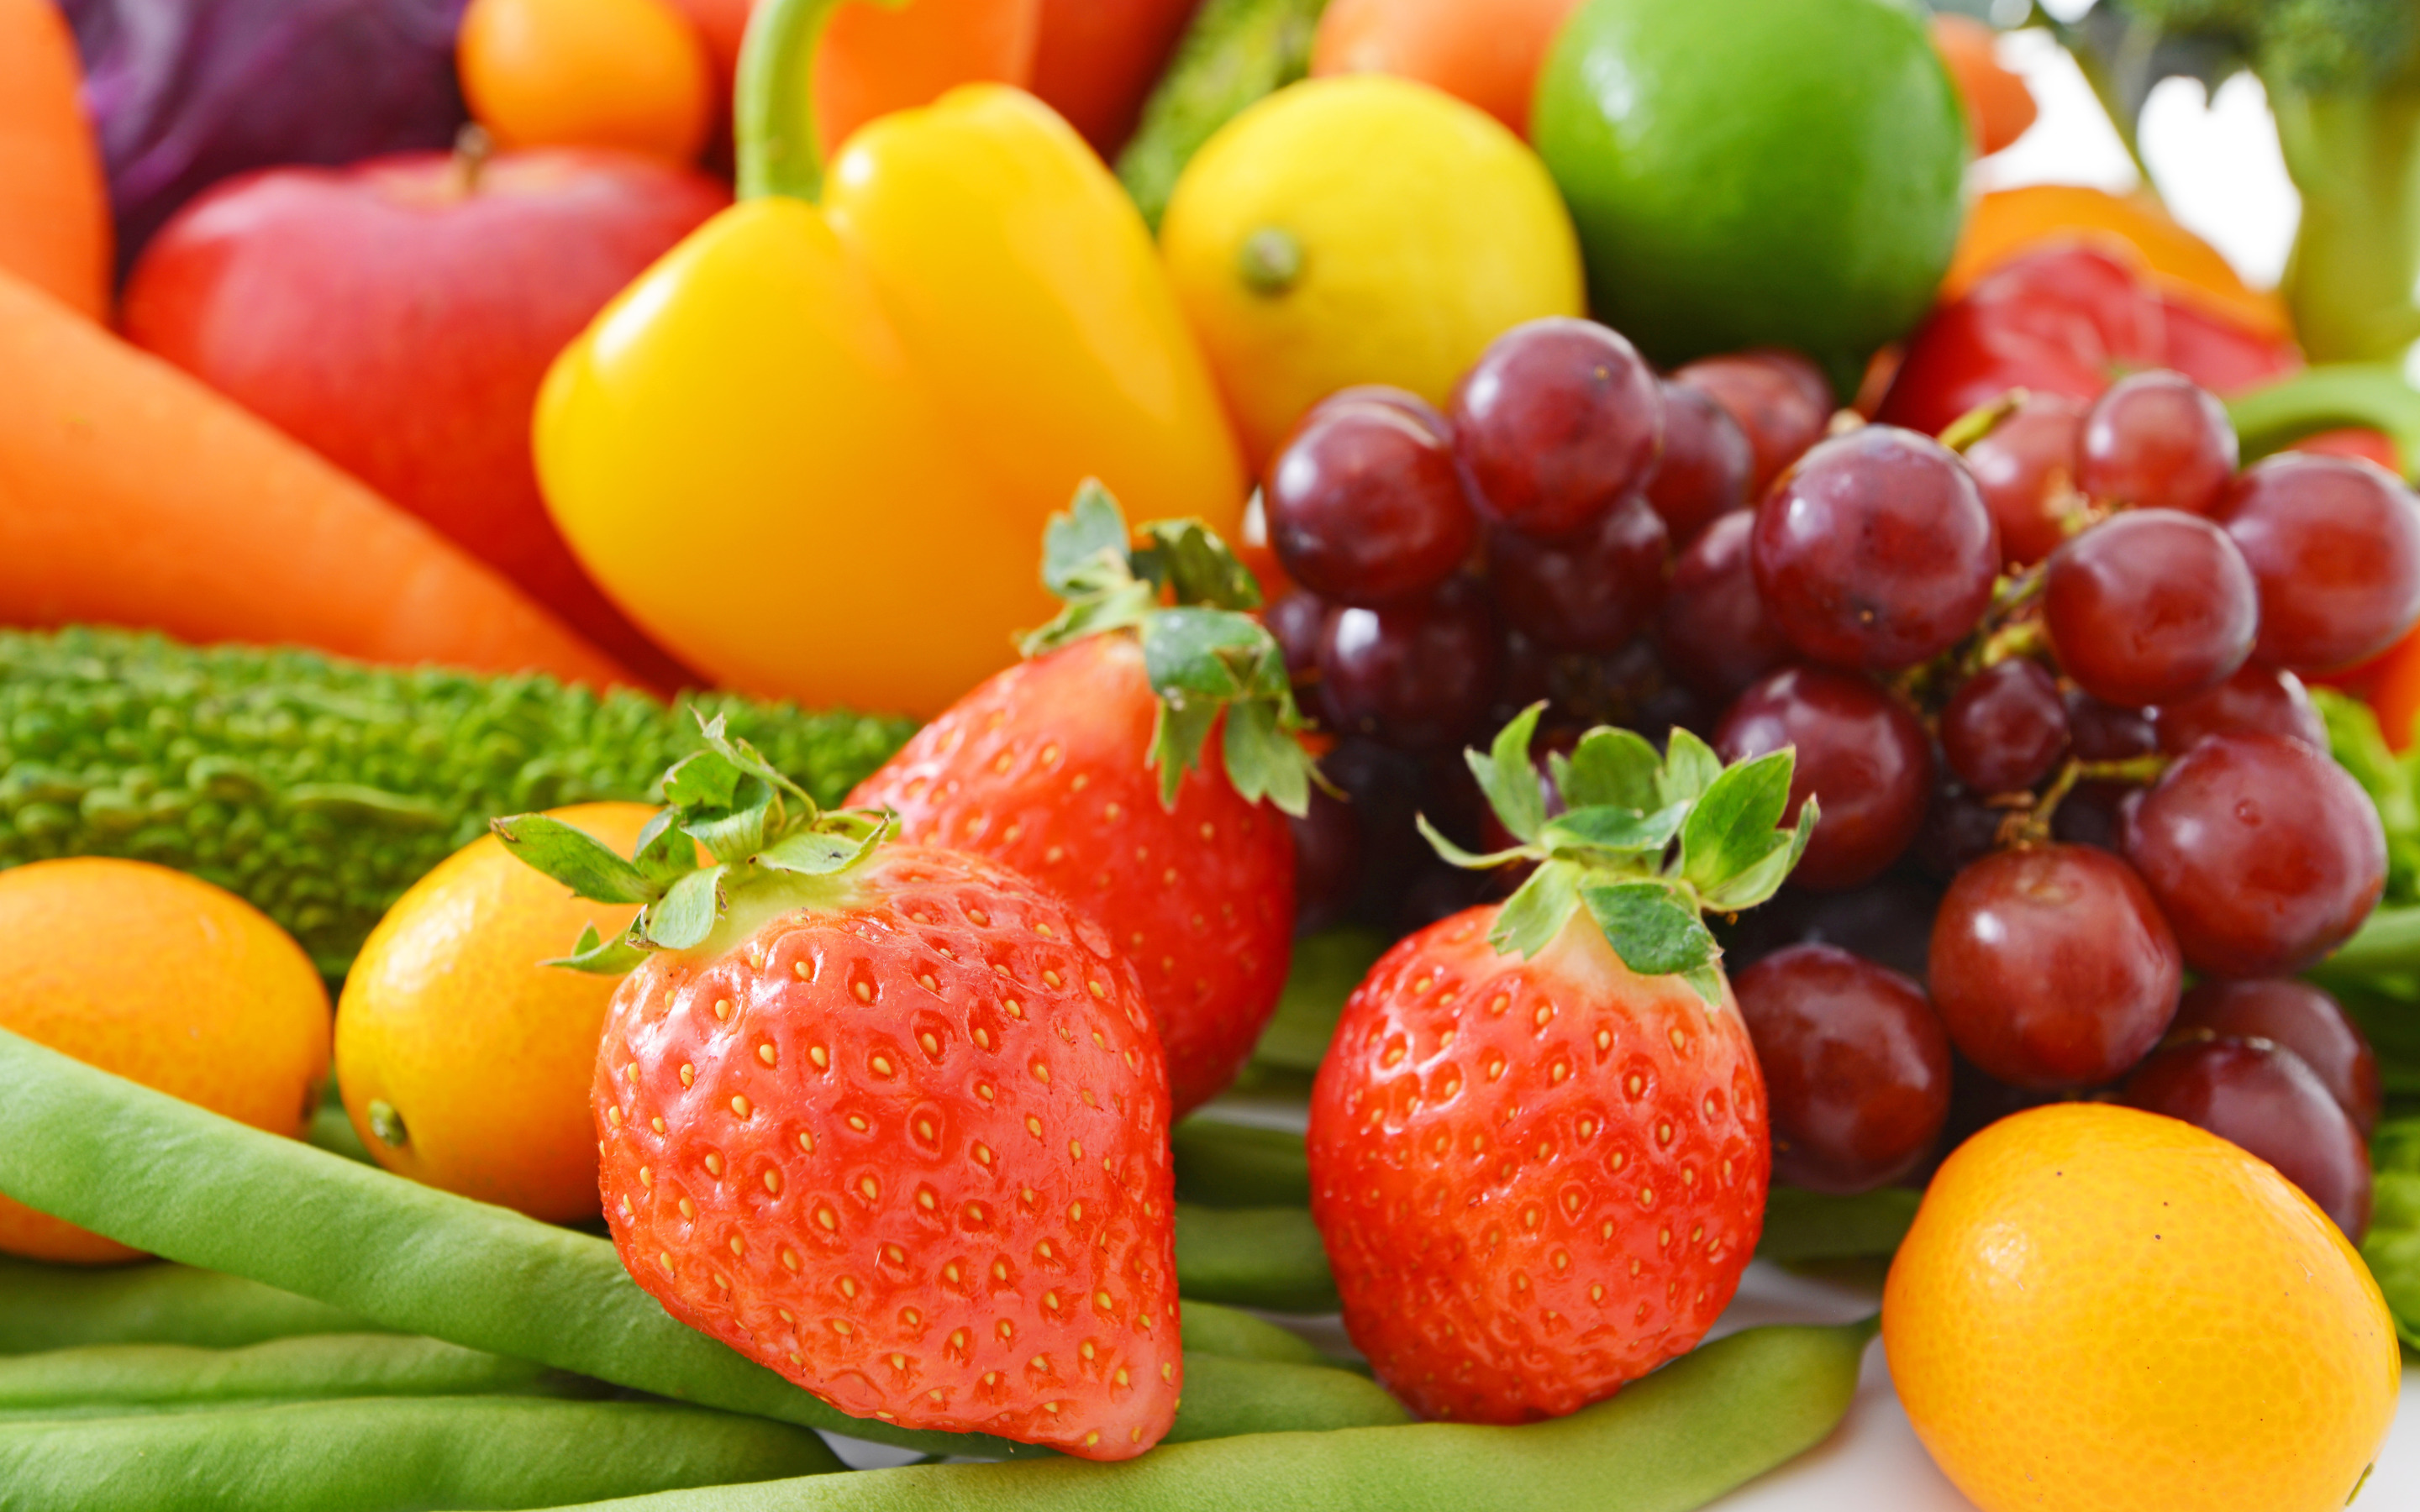 Vegetables pictures. Овощи и фрукты. Овощи, фрукты, ягоды. Фрукты овощи яркие. Красивые овощи.